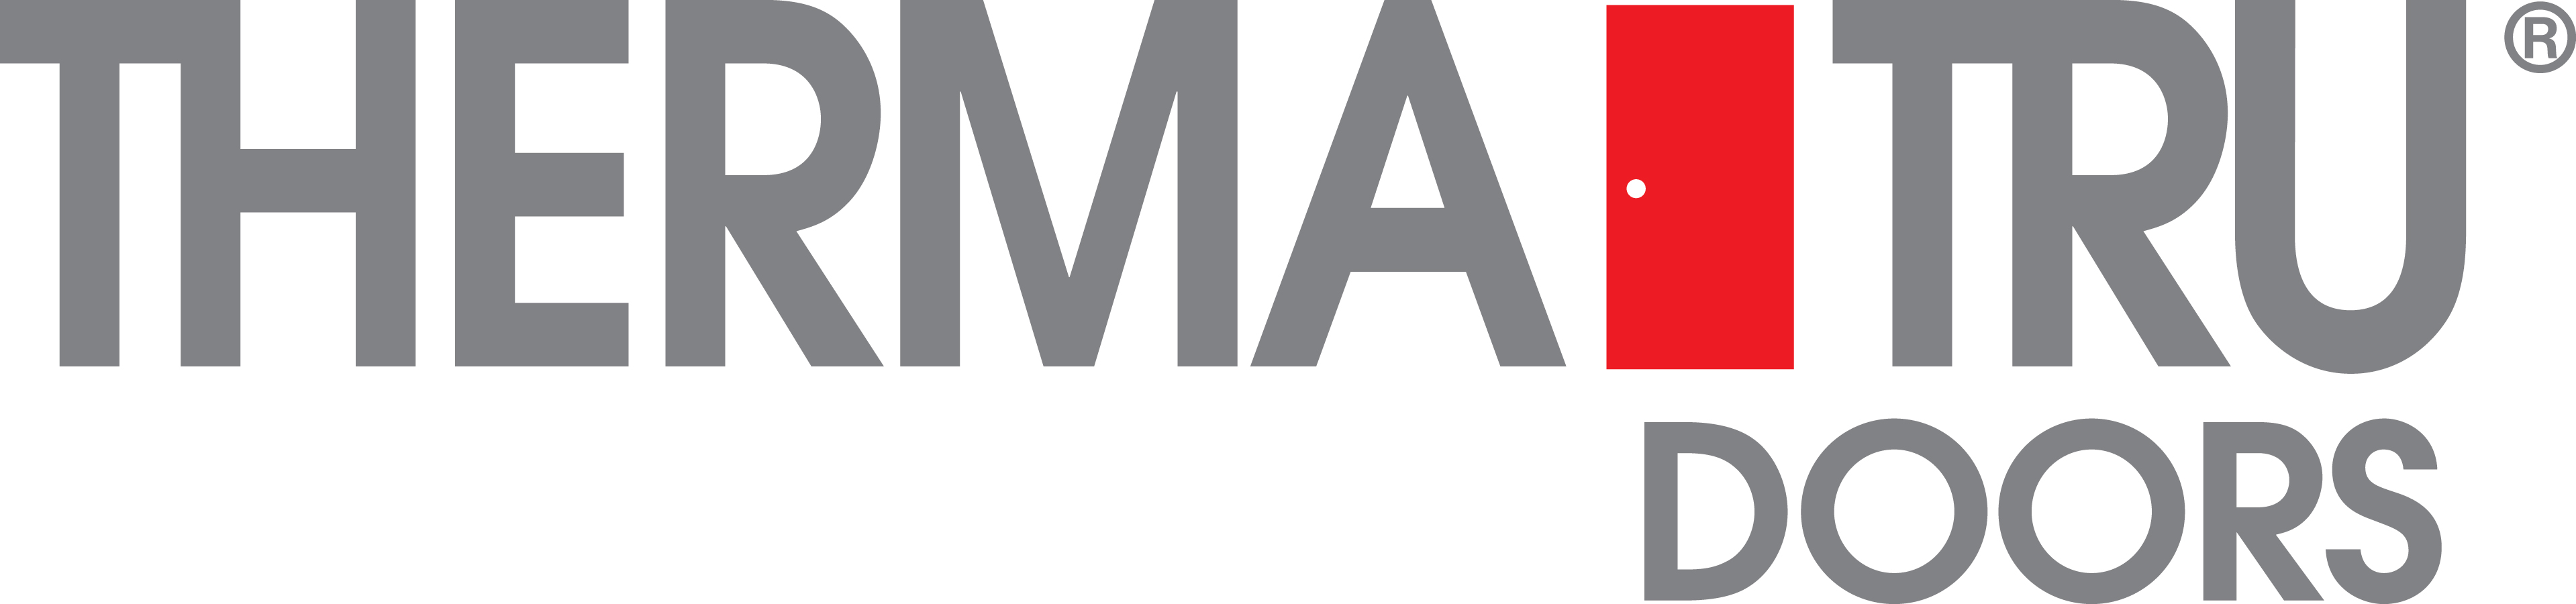 Therma Tru Logo